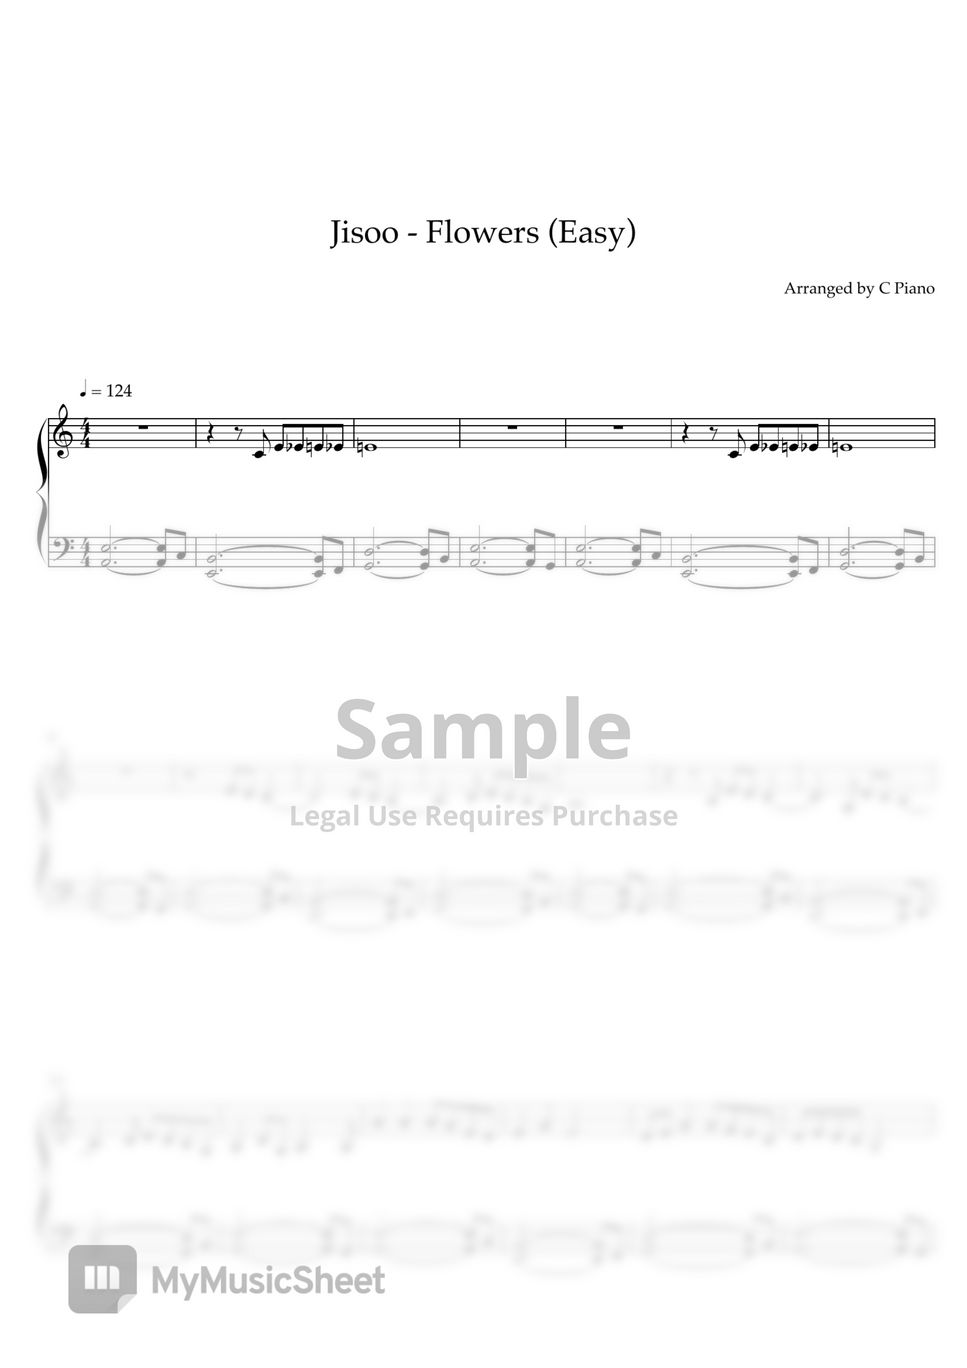 Jisoo - Flower (Easy Version) by C Piano